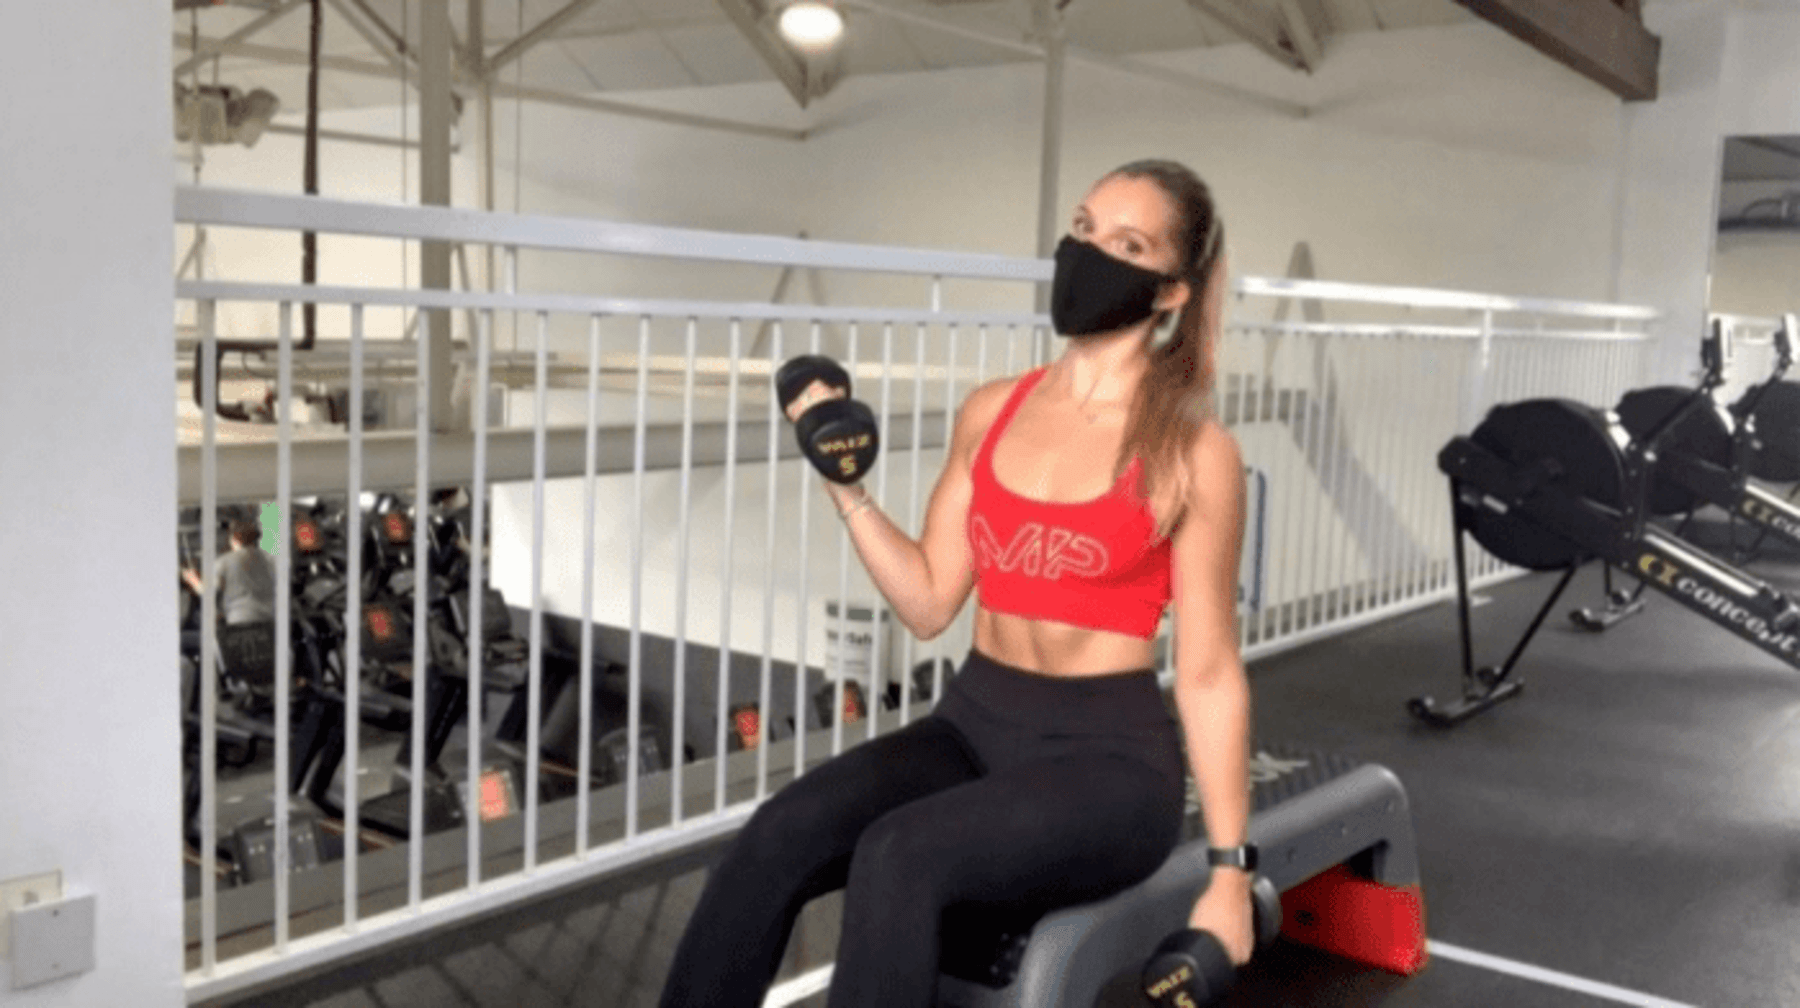 Hoe zijn de sportscholen na de Lockdown? | First Gym Workout With Amber Smith